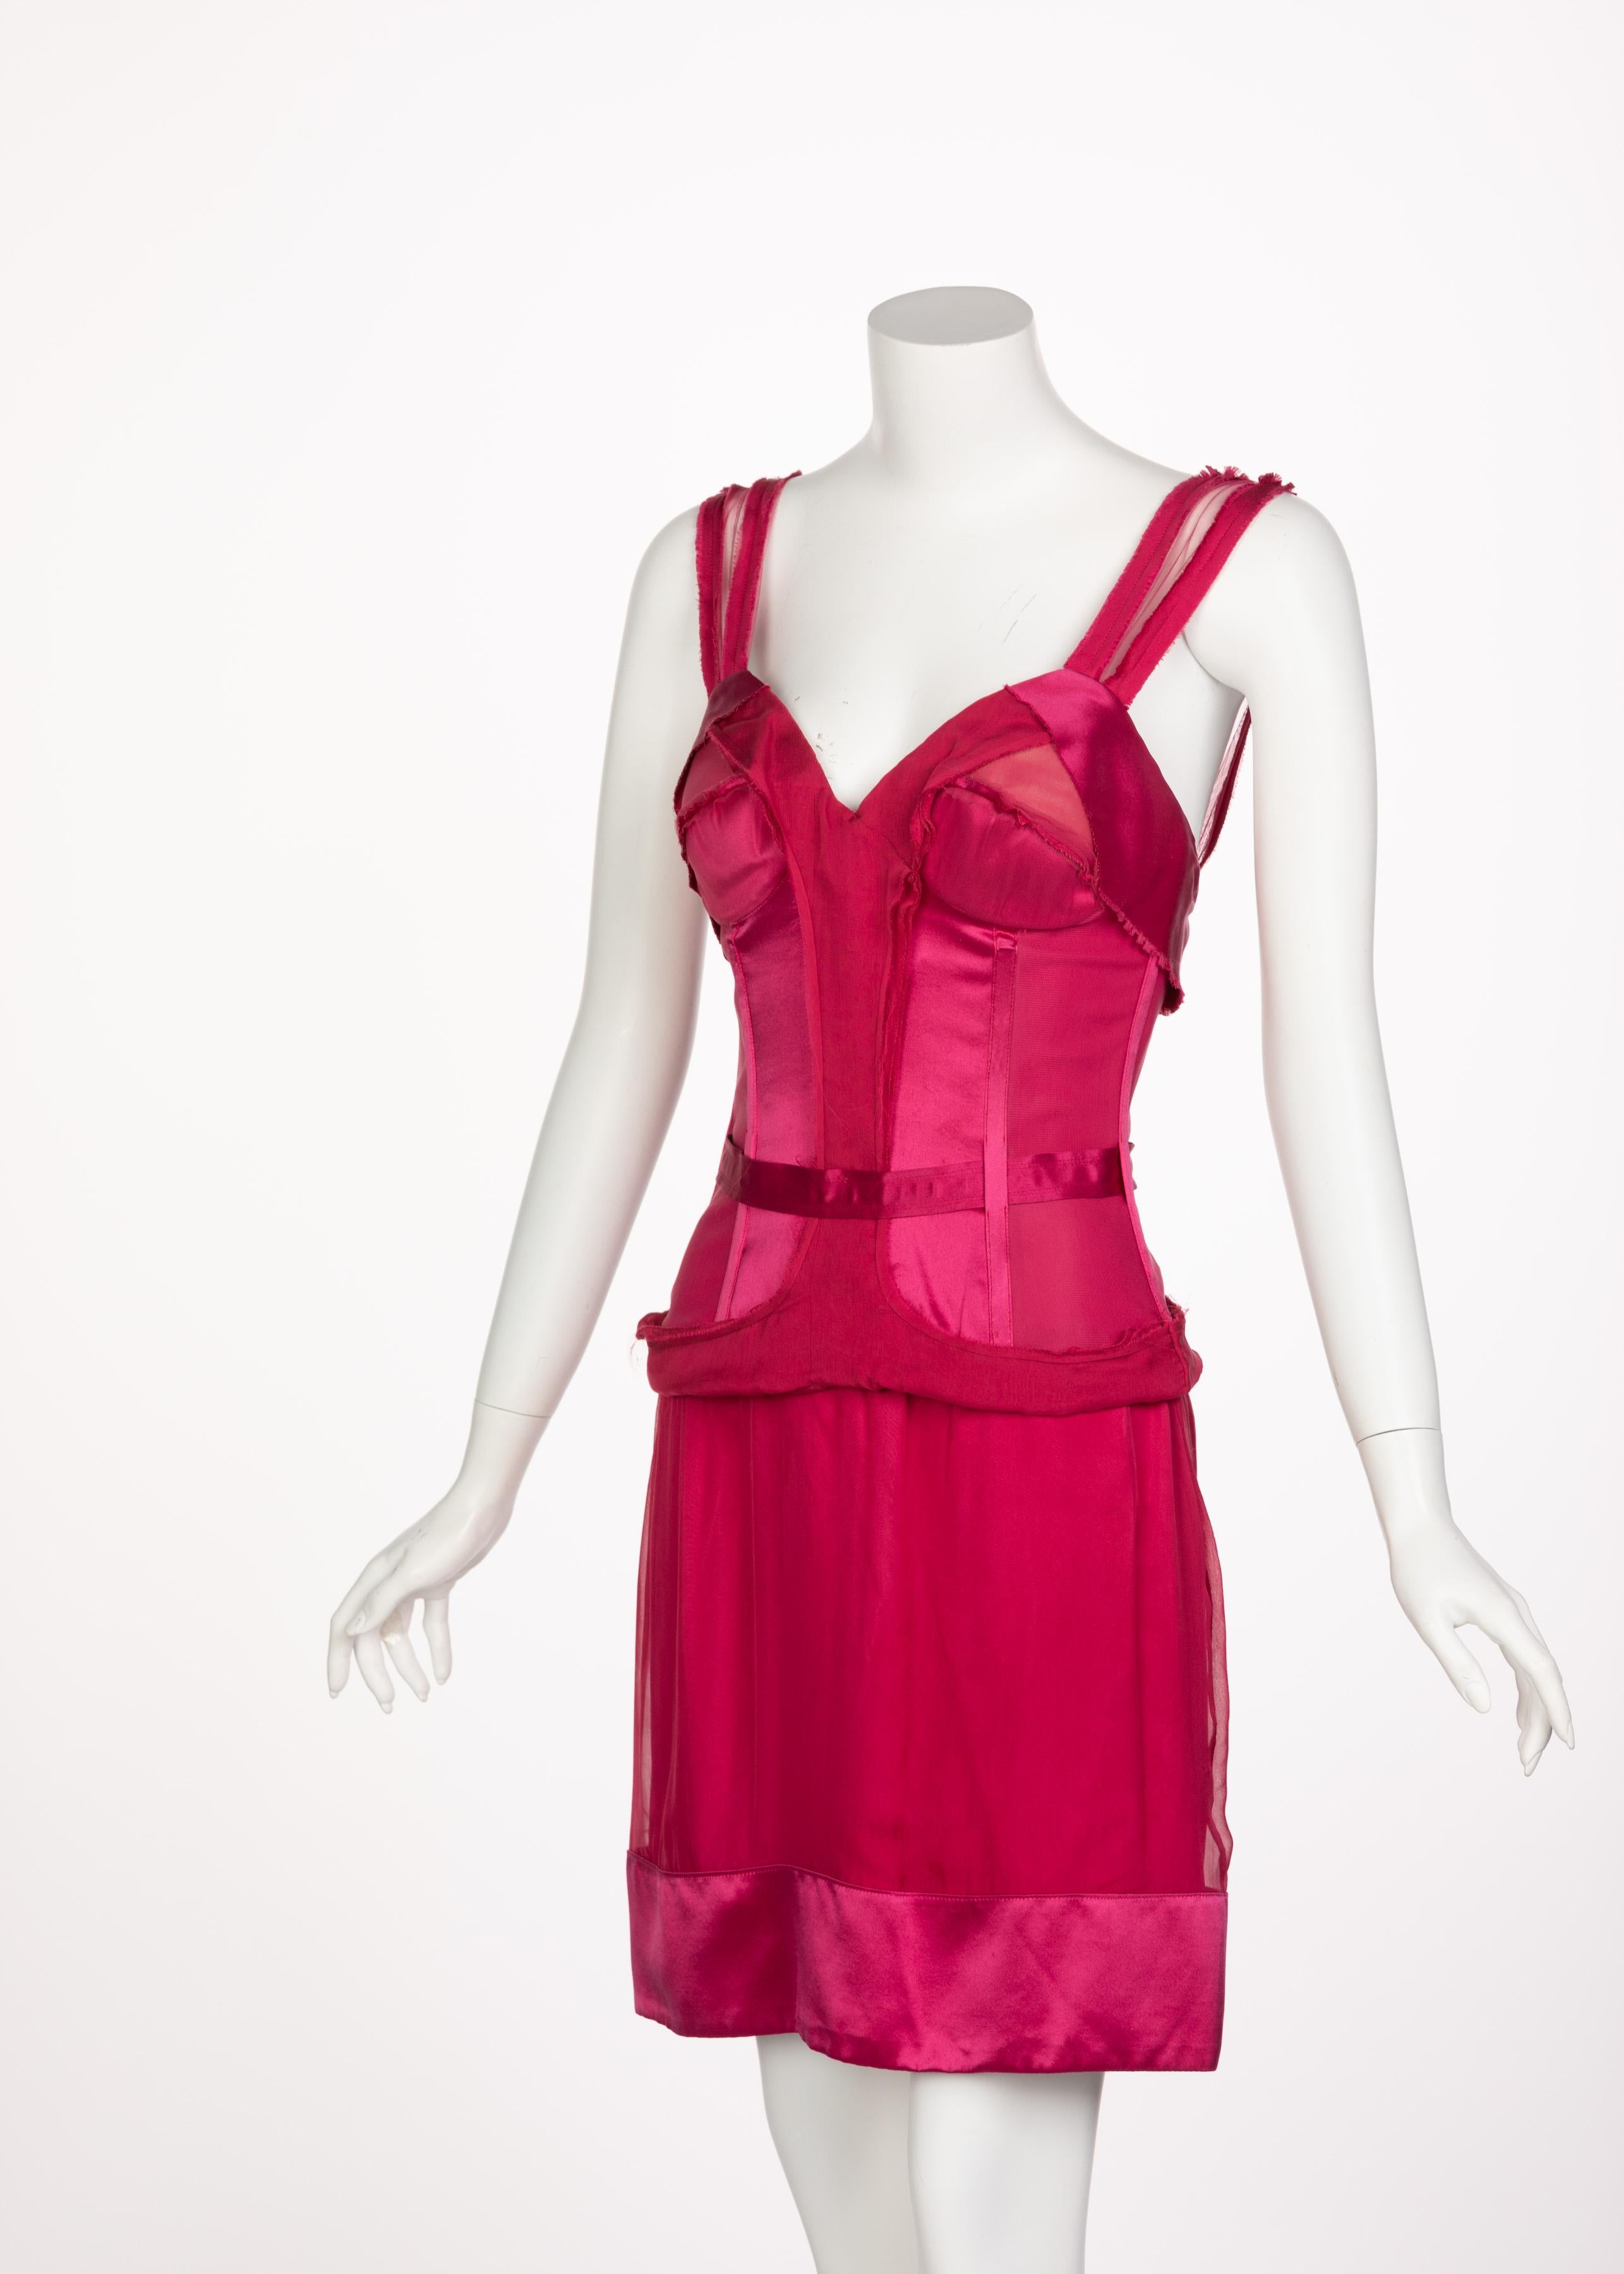 stella mccartney pink dress